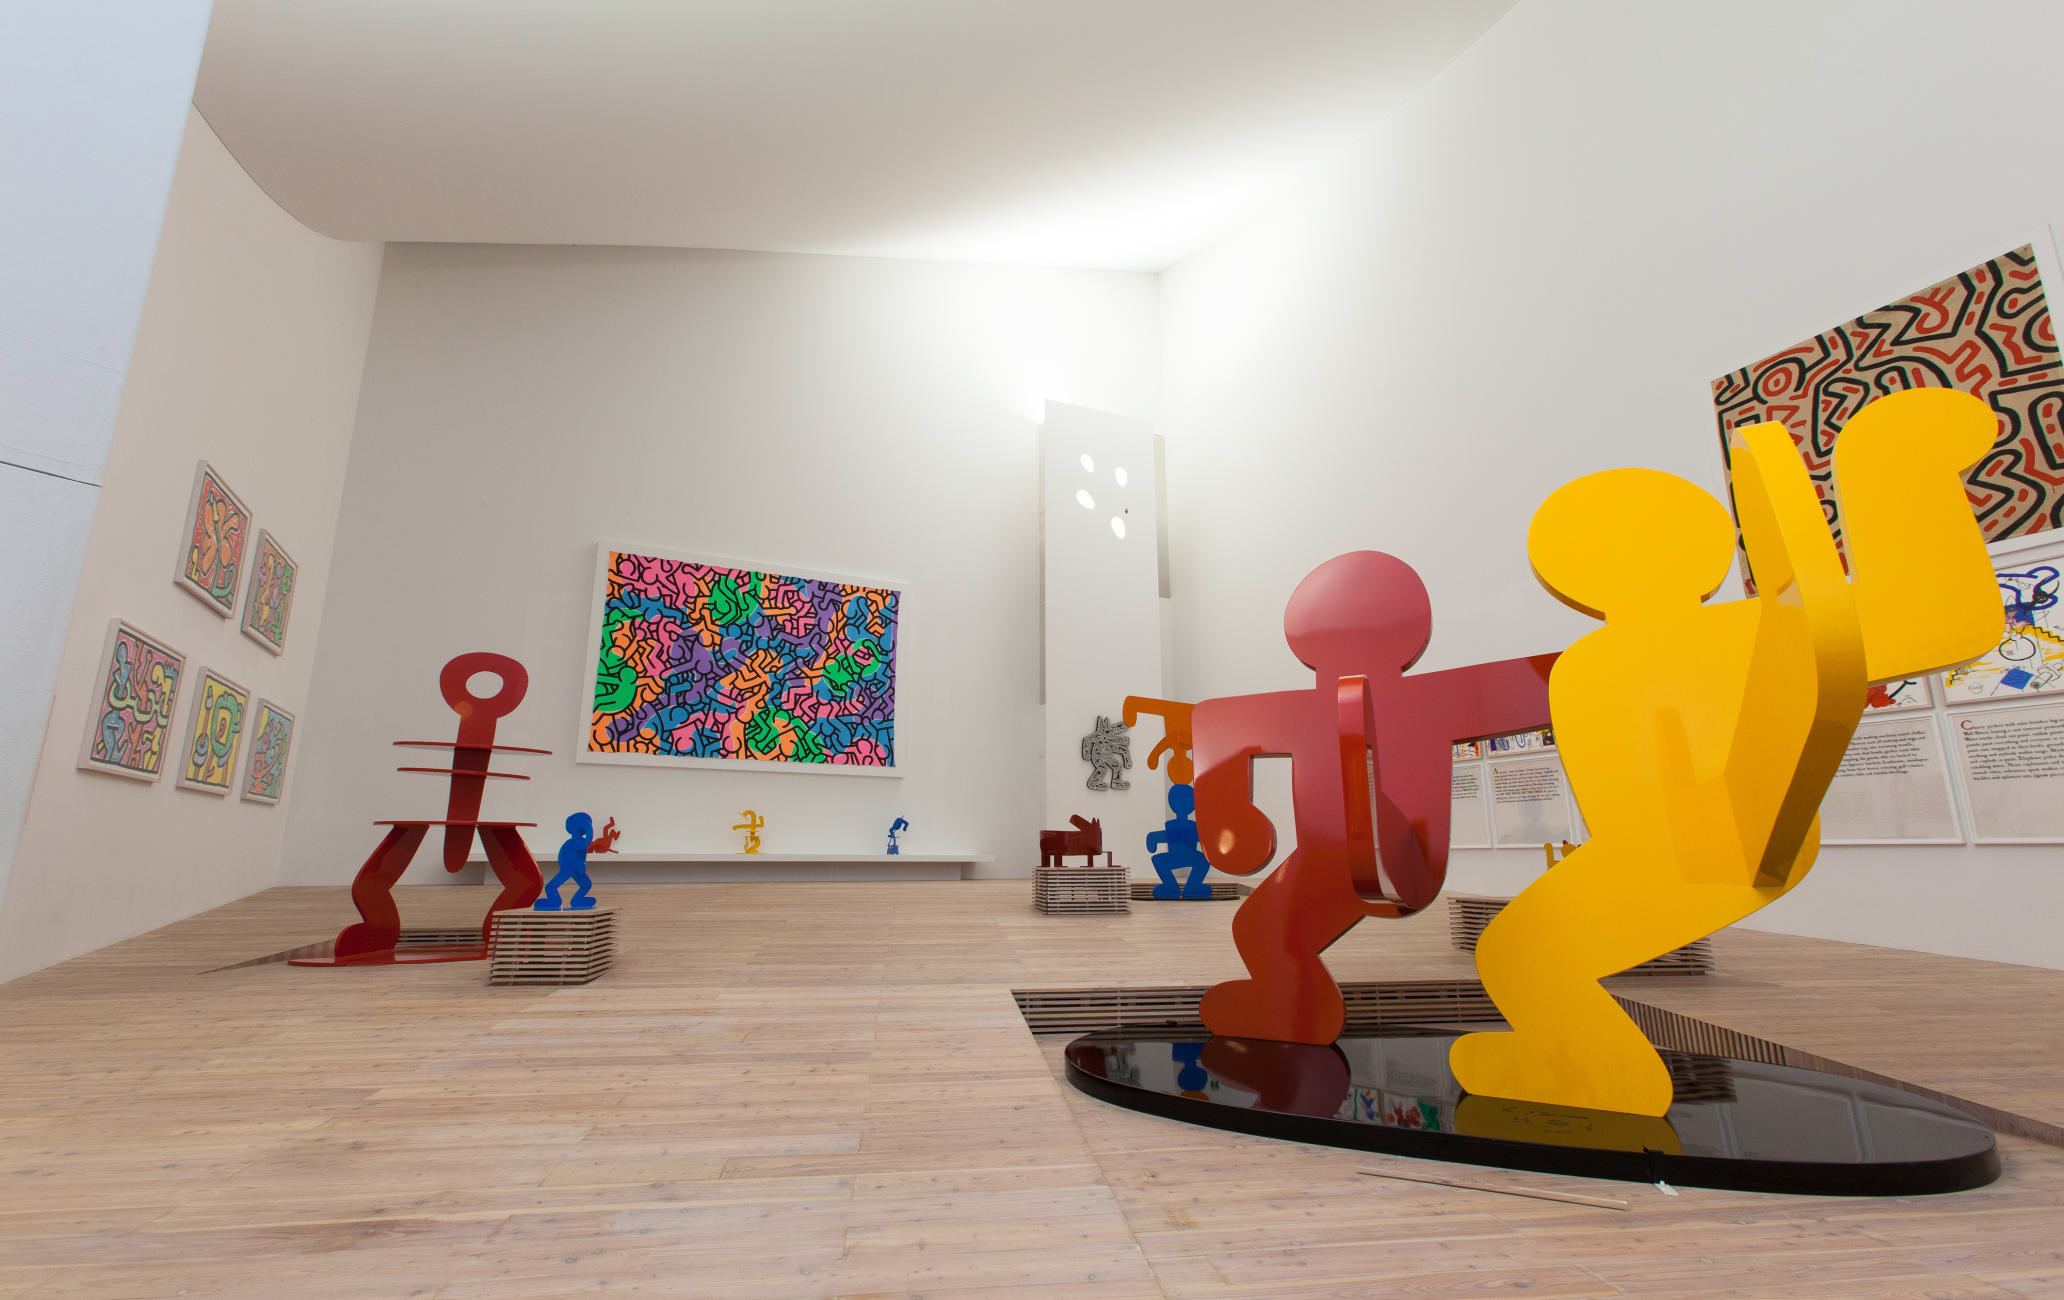 Nakamura Keith Haring Collection